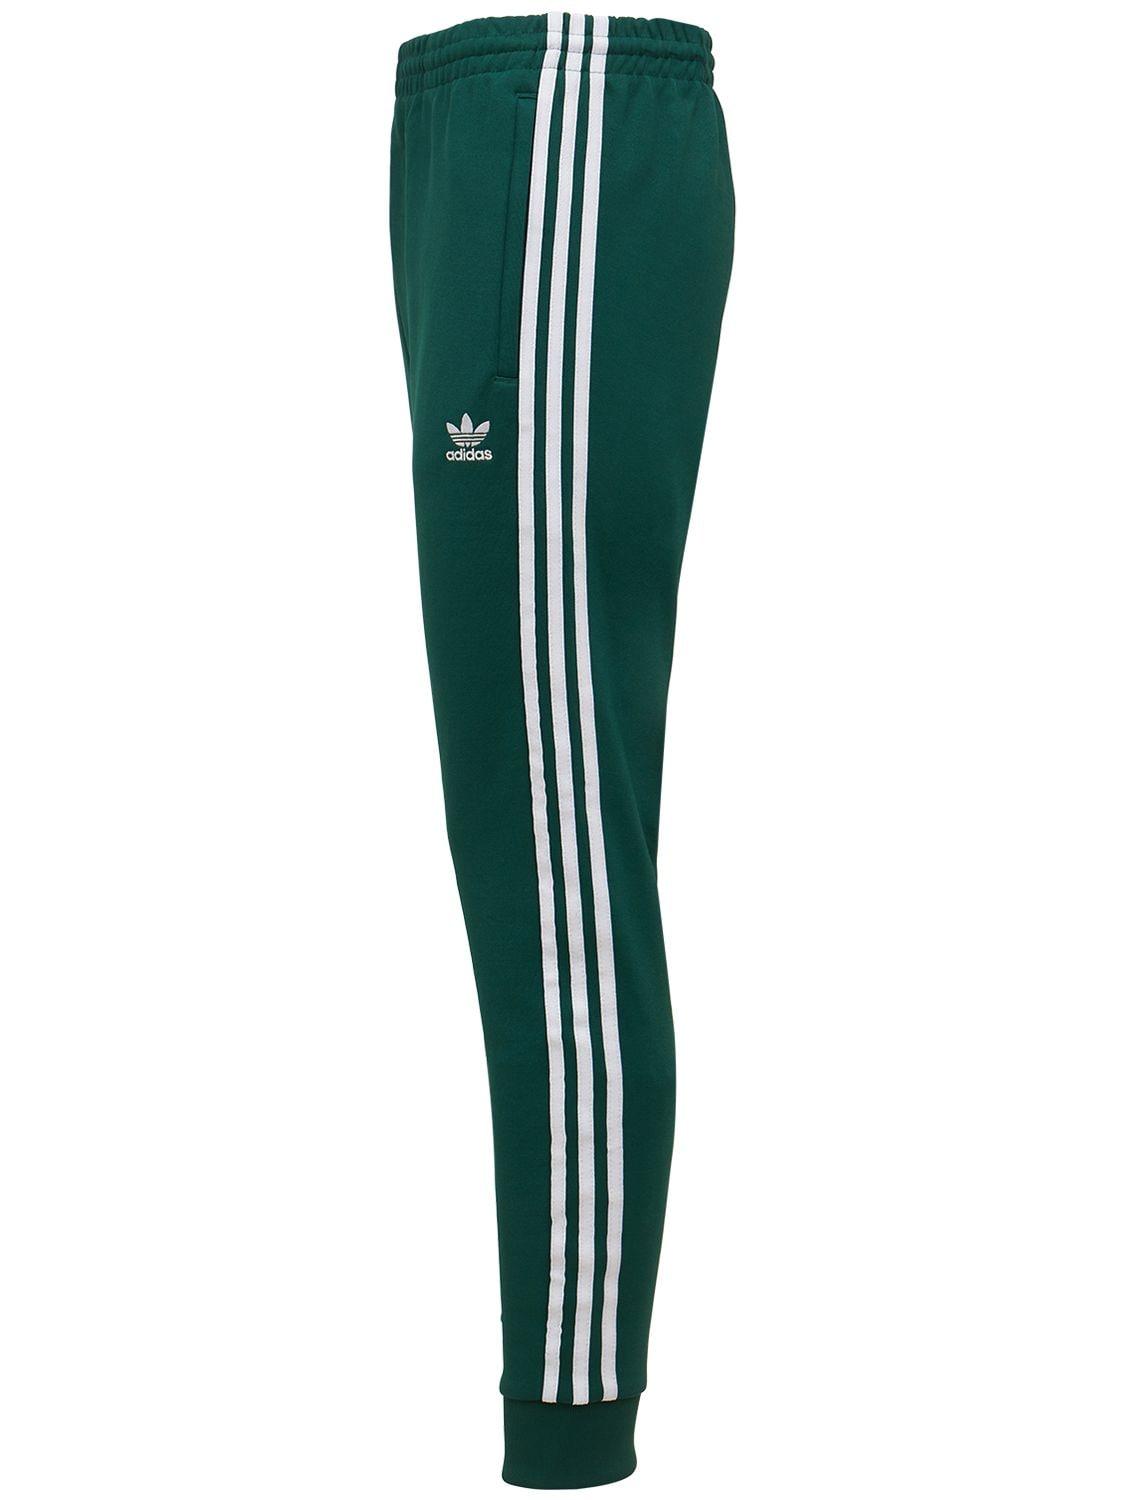 SST green women's sports pant - ADIDAS ORIGINALS - Pavidas